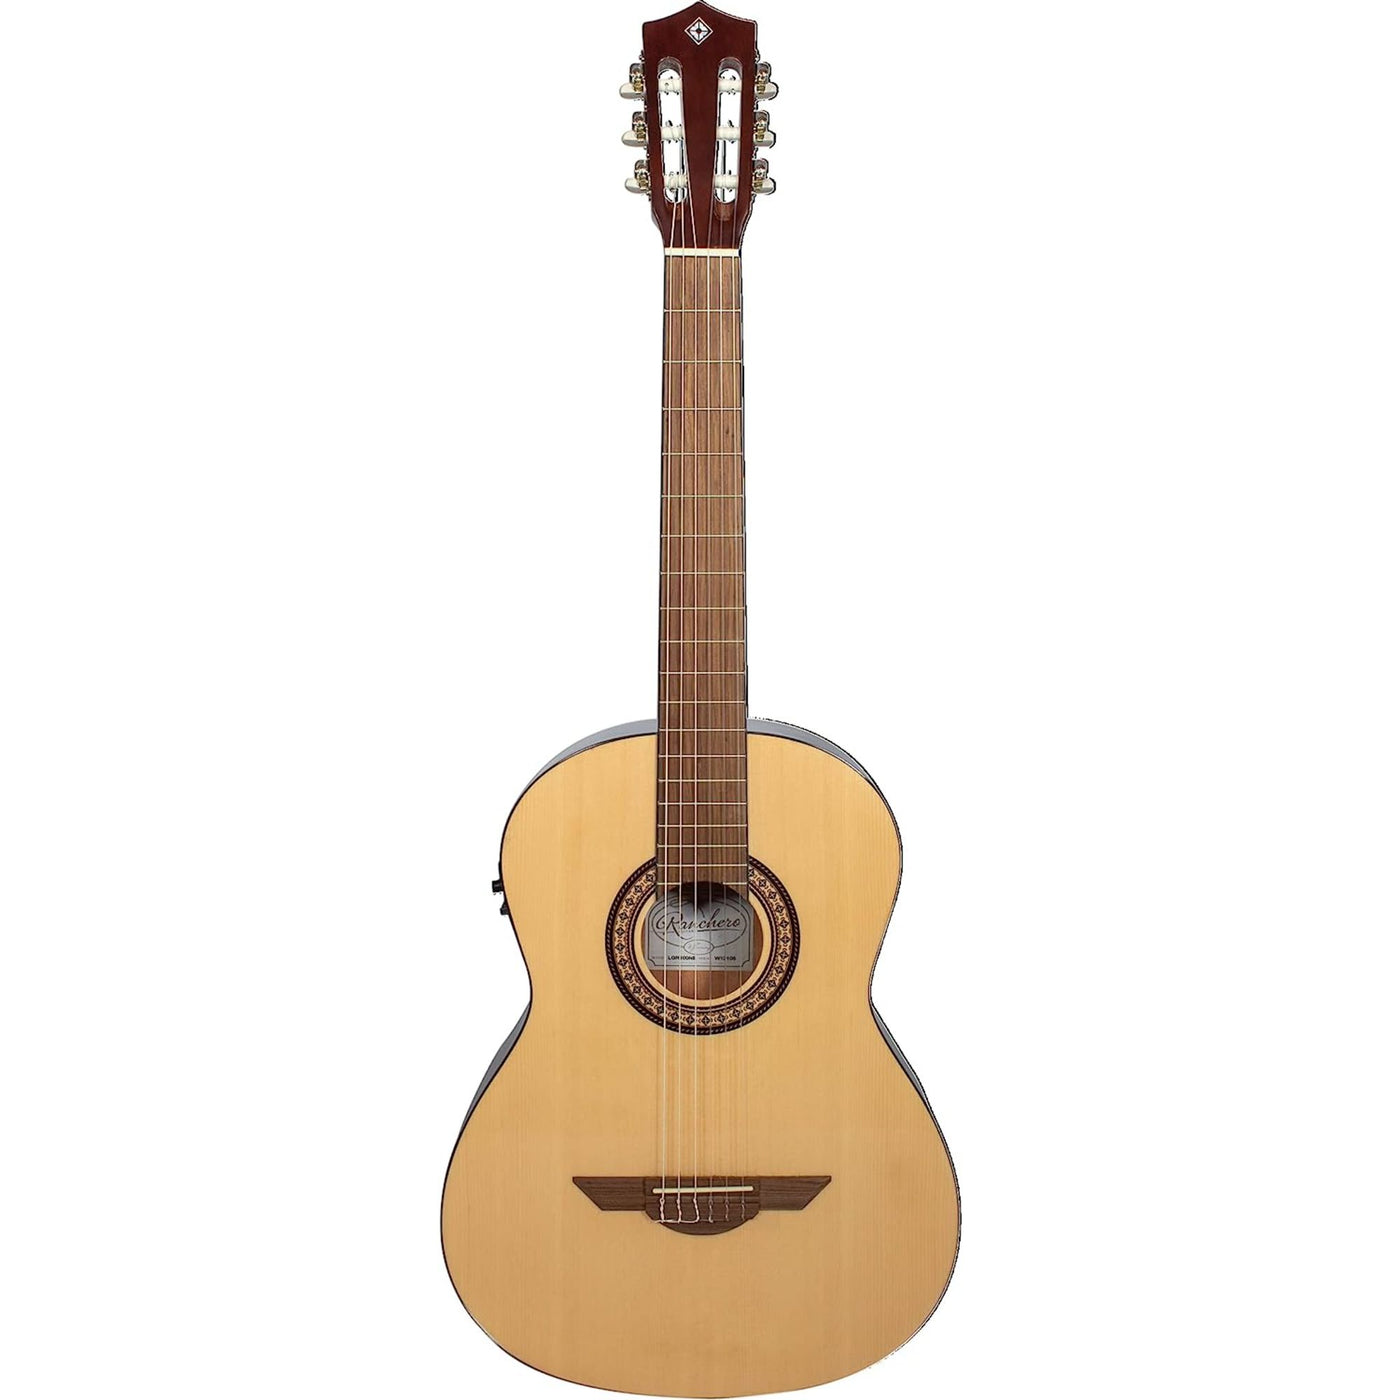 H. Jimenez LGR100NE Ranchero Series Full Size Nylon String Guitar with Pick up